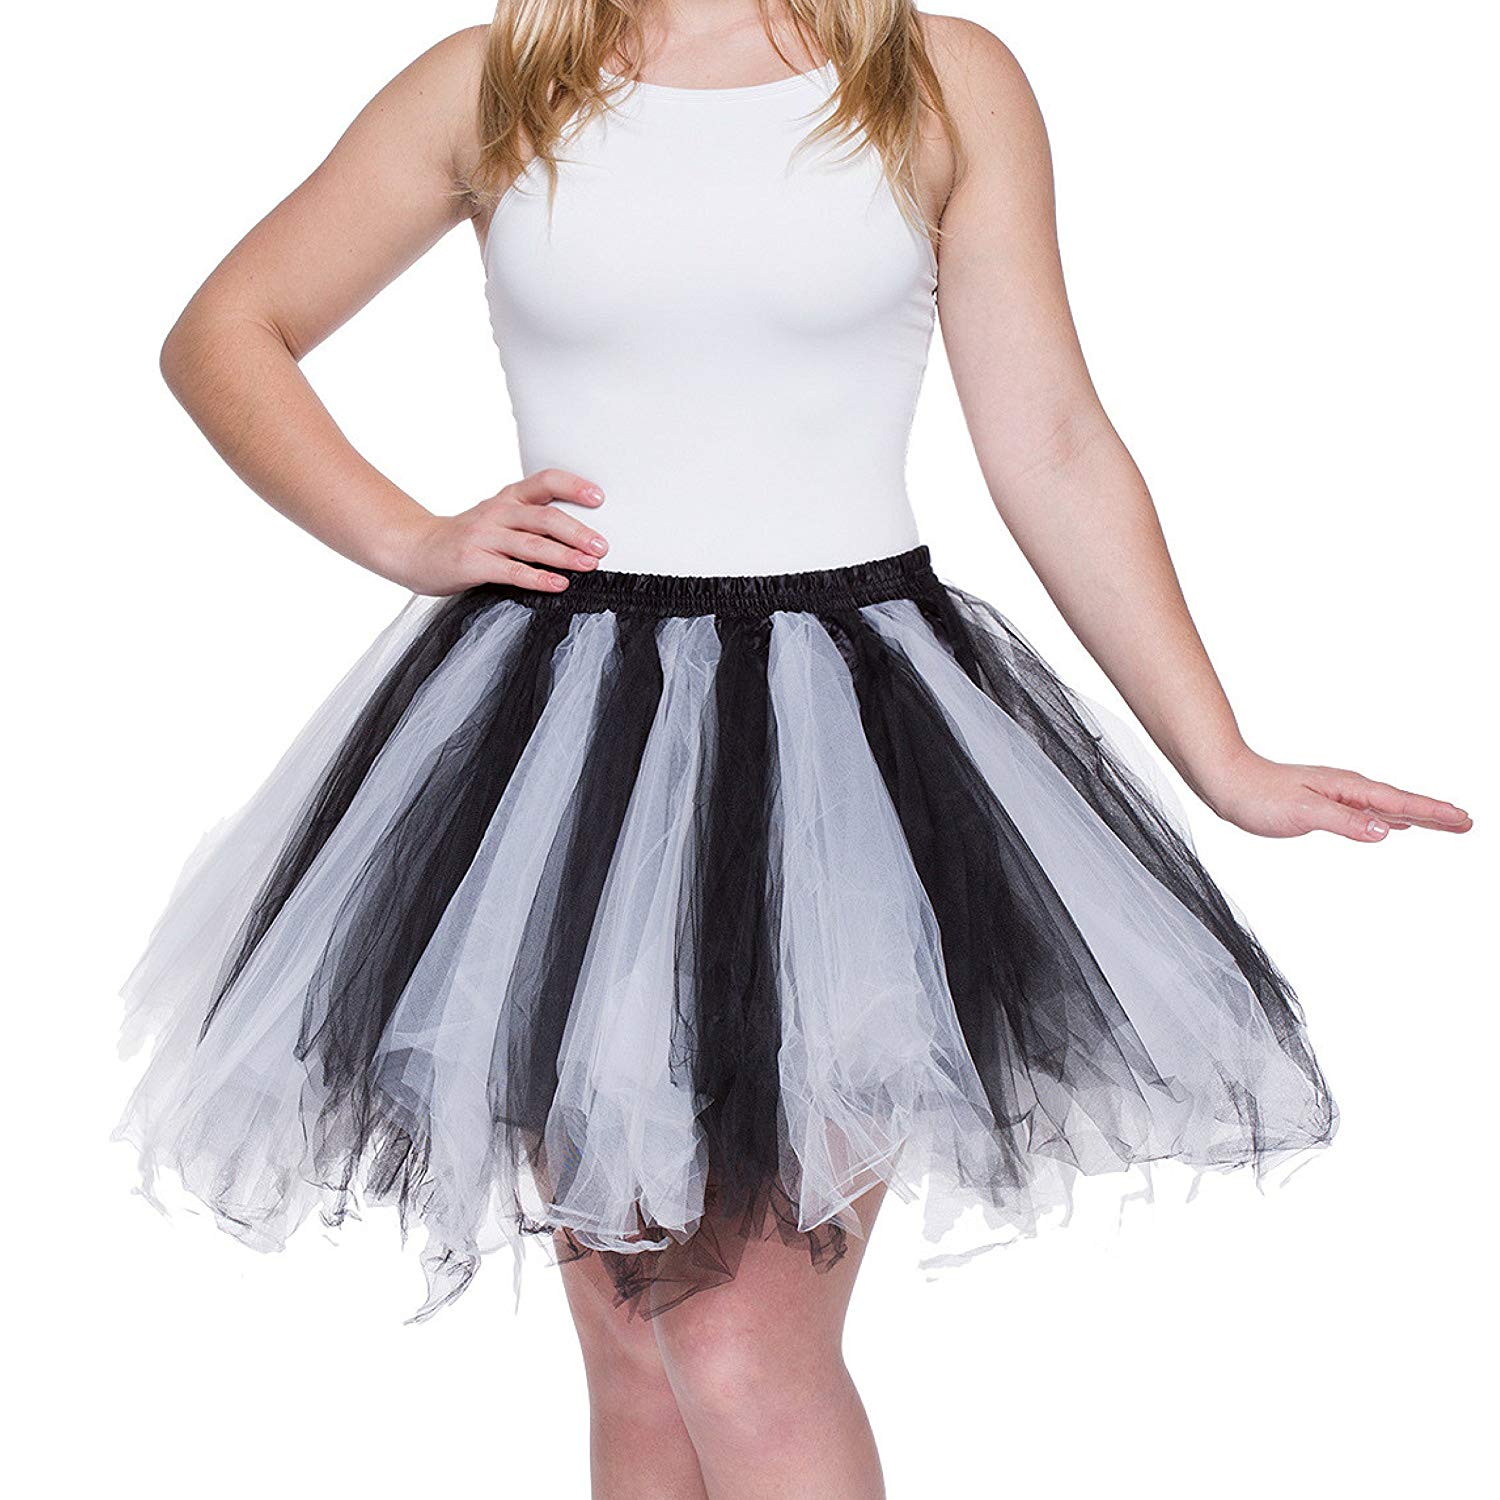 Tutu Skirt for Adults Black White